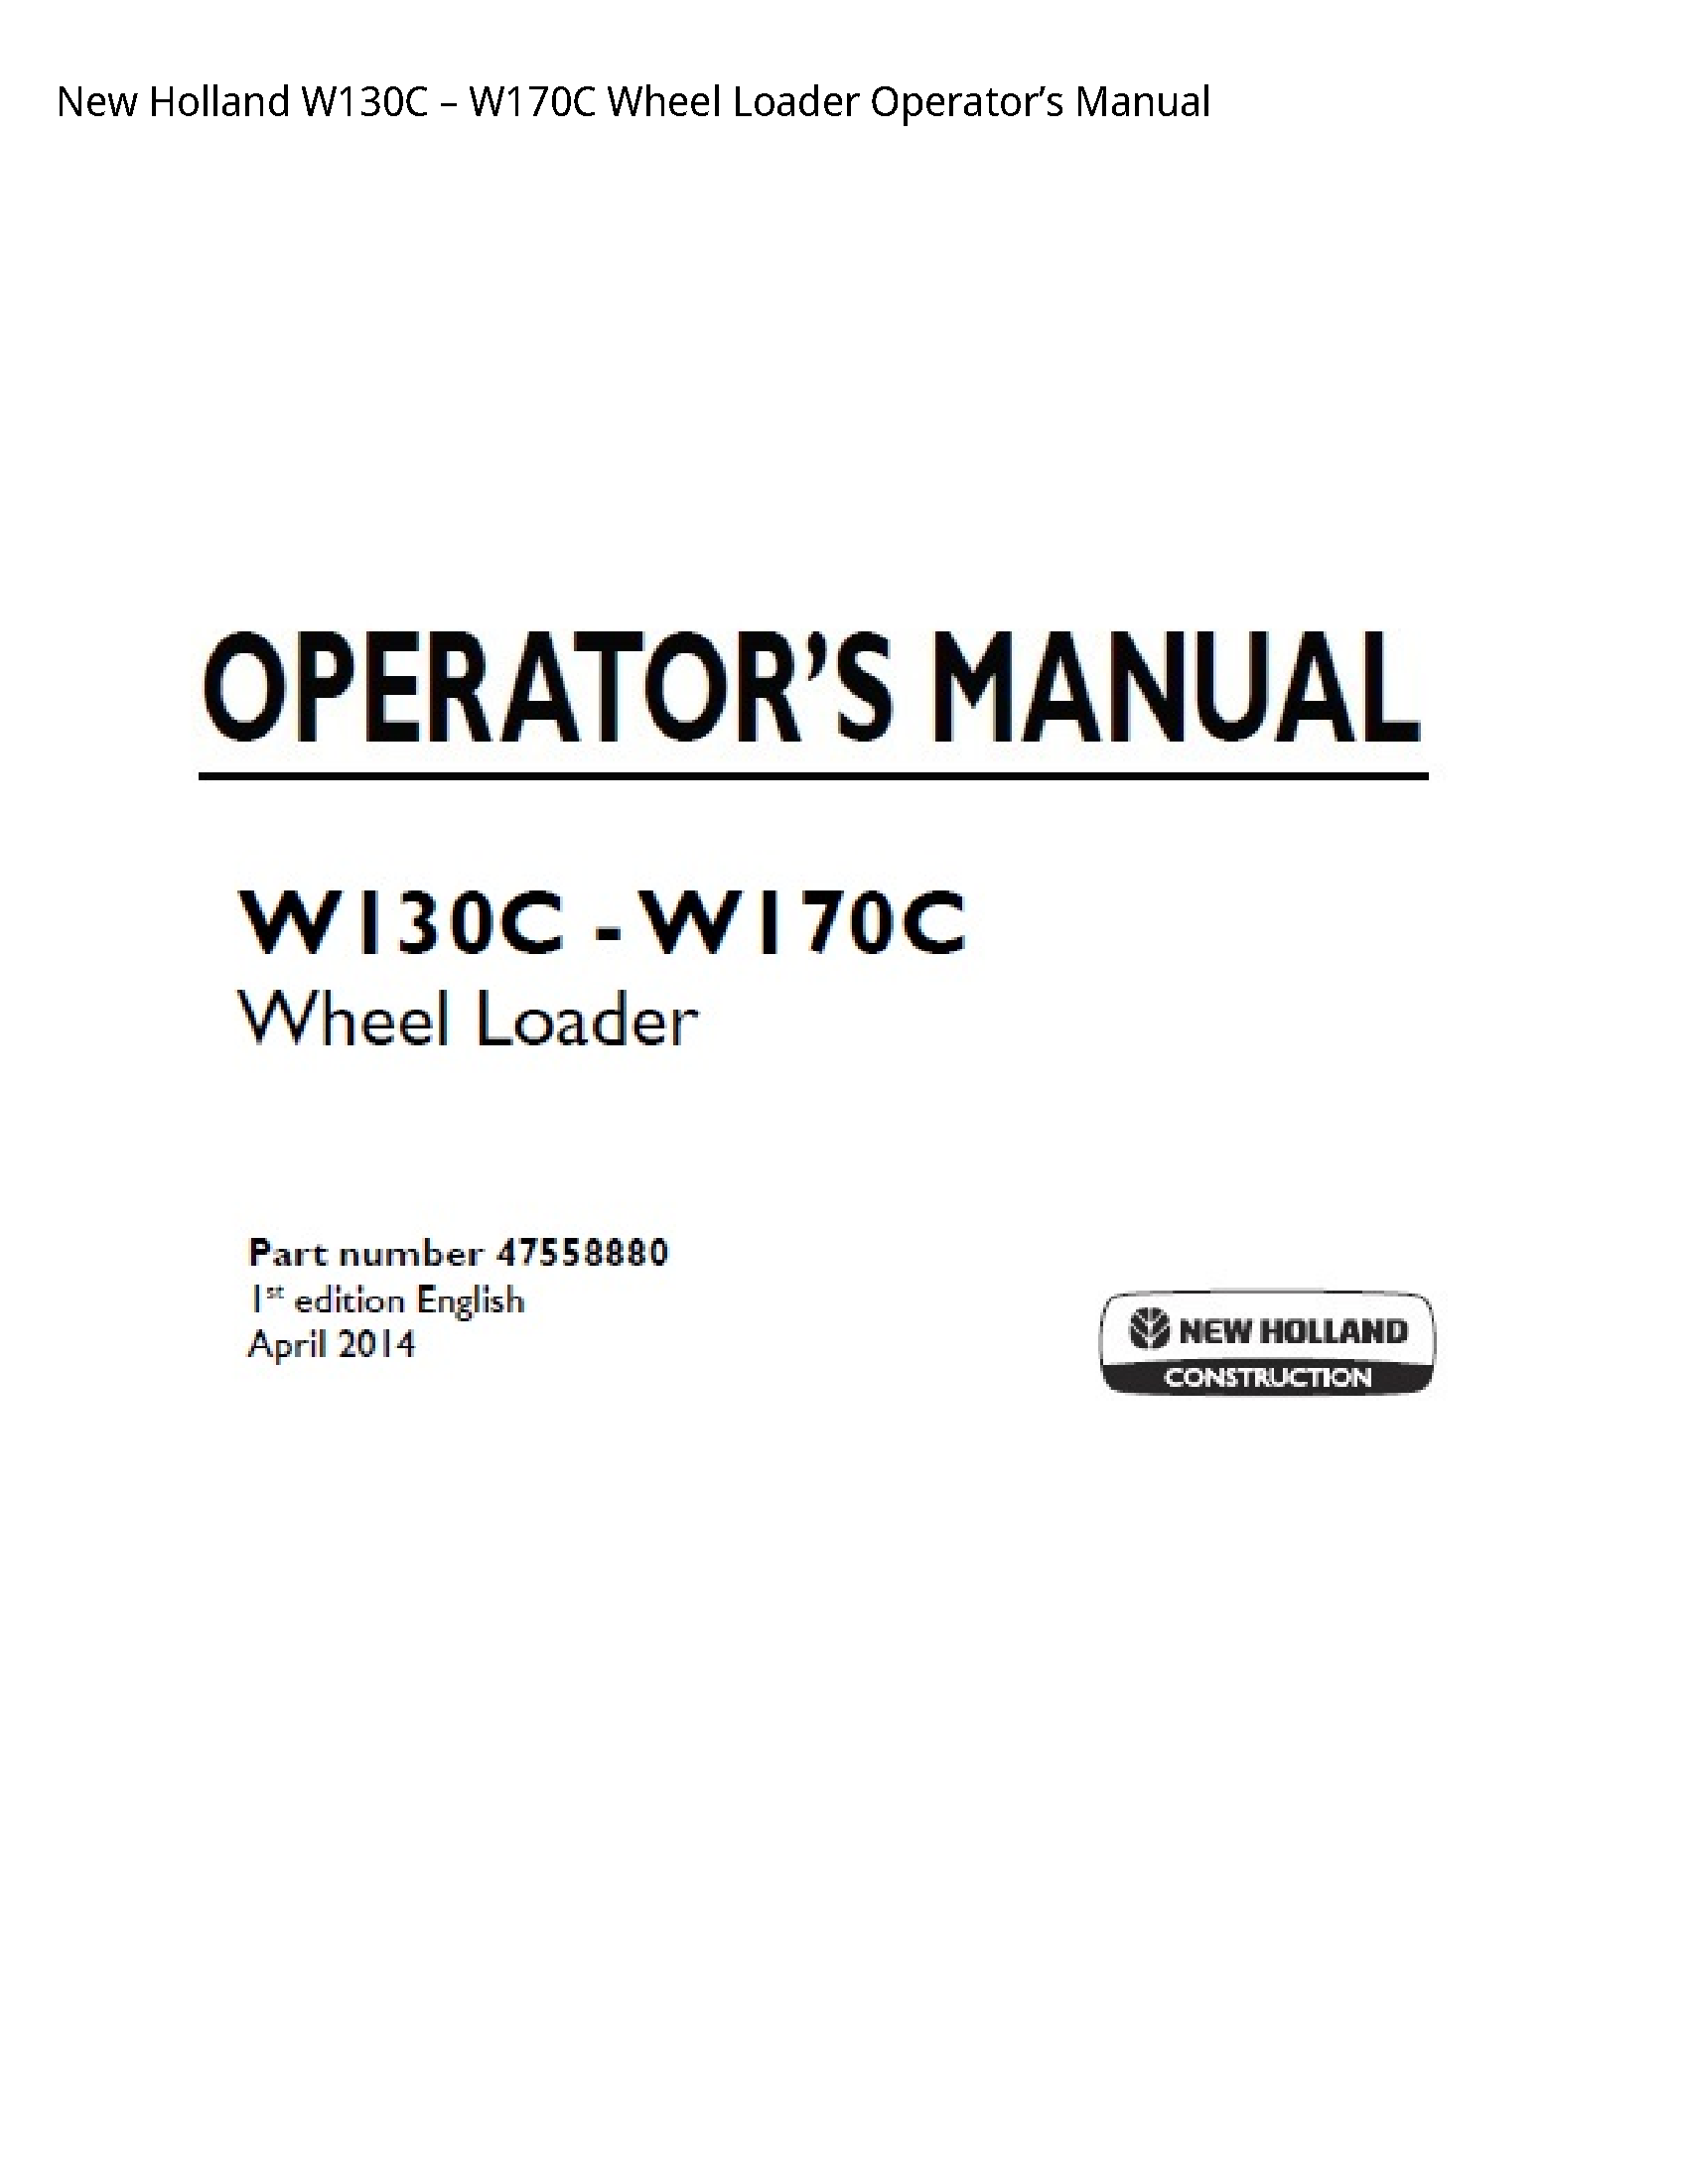 New Holland W130C Wheel Loader Operator’s manual